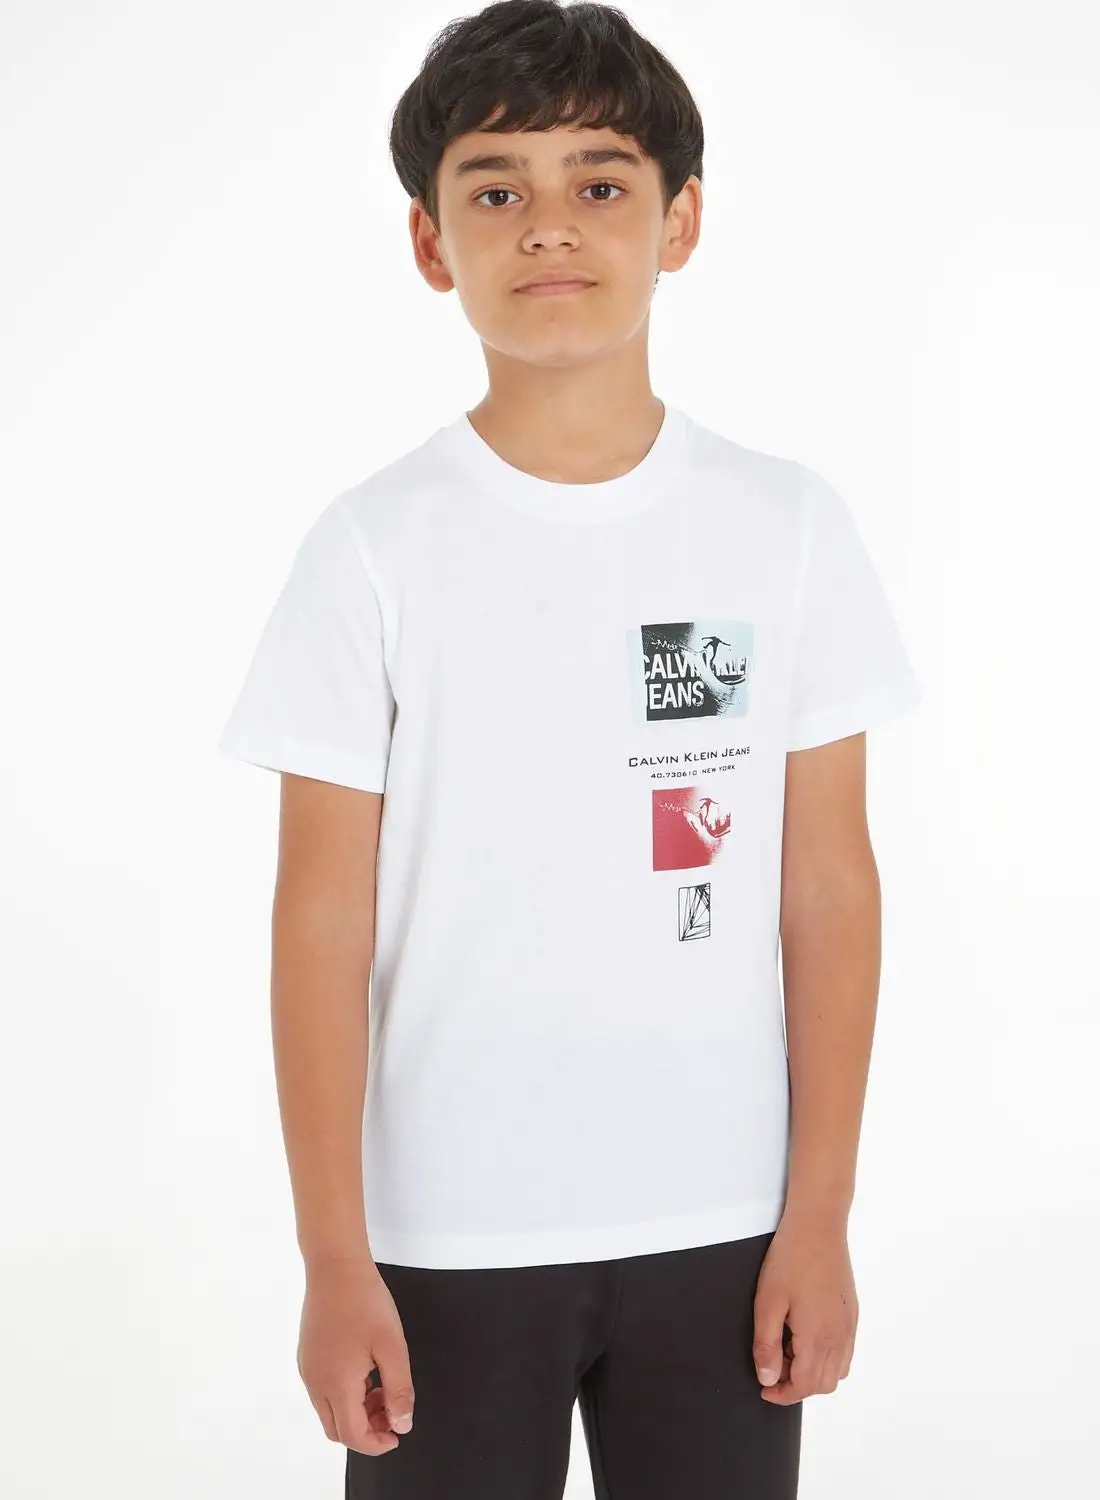 Calvin Klein Jeans Kids Graphic T-Shirt